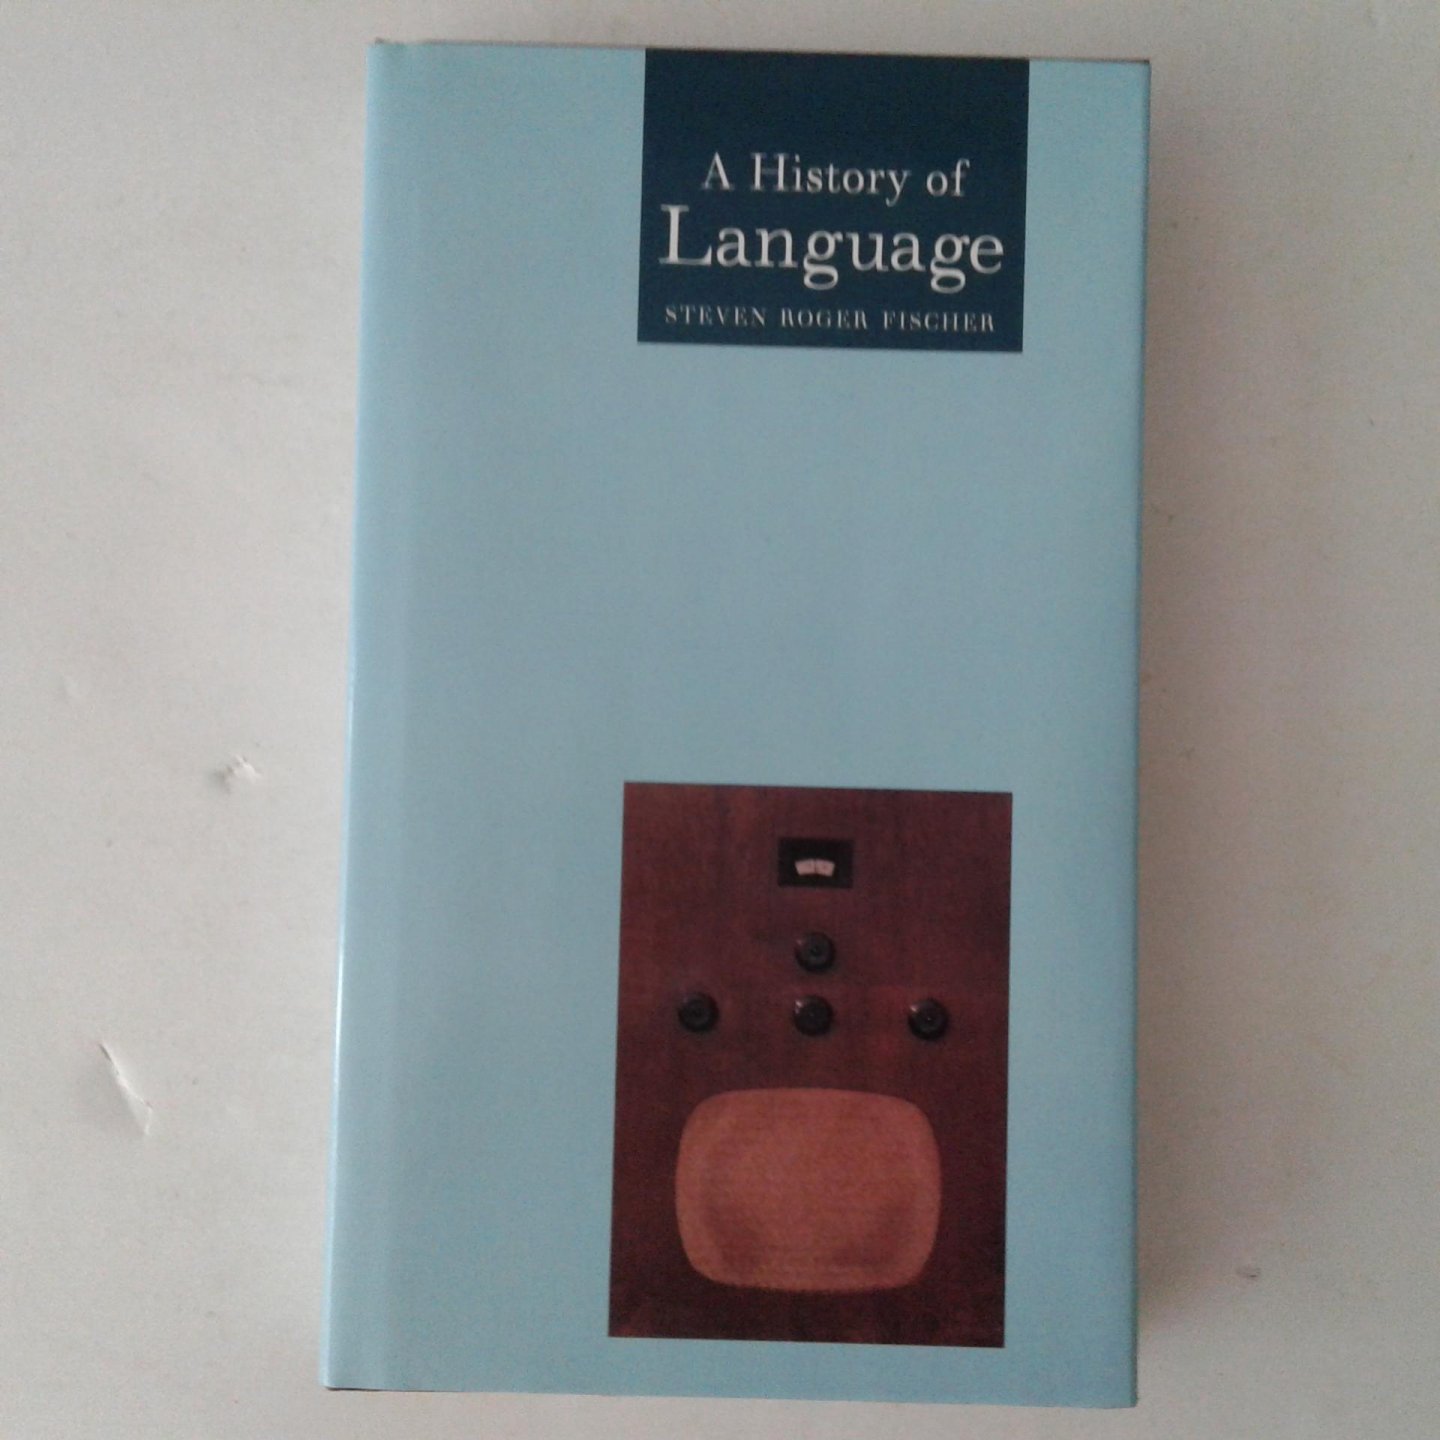 Fischer, Steven Roger - History of Language